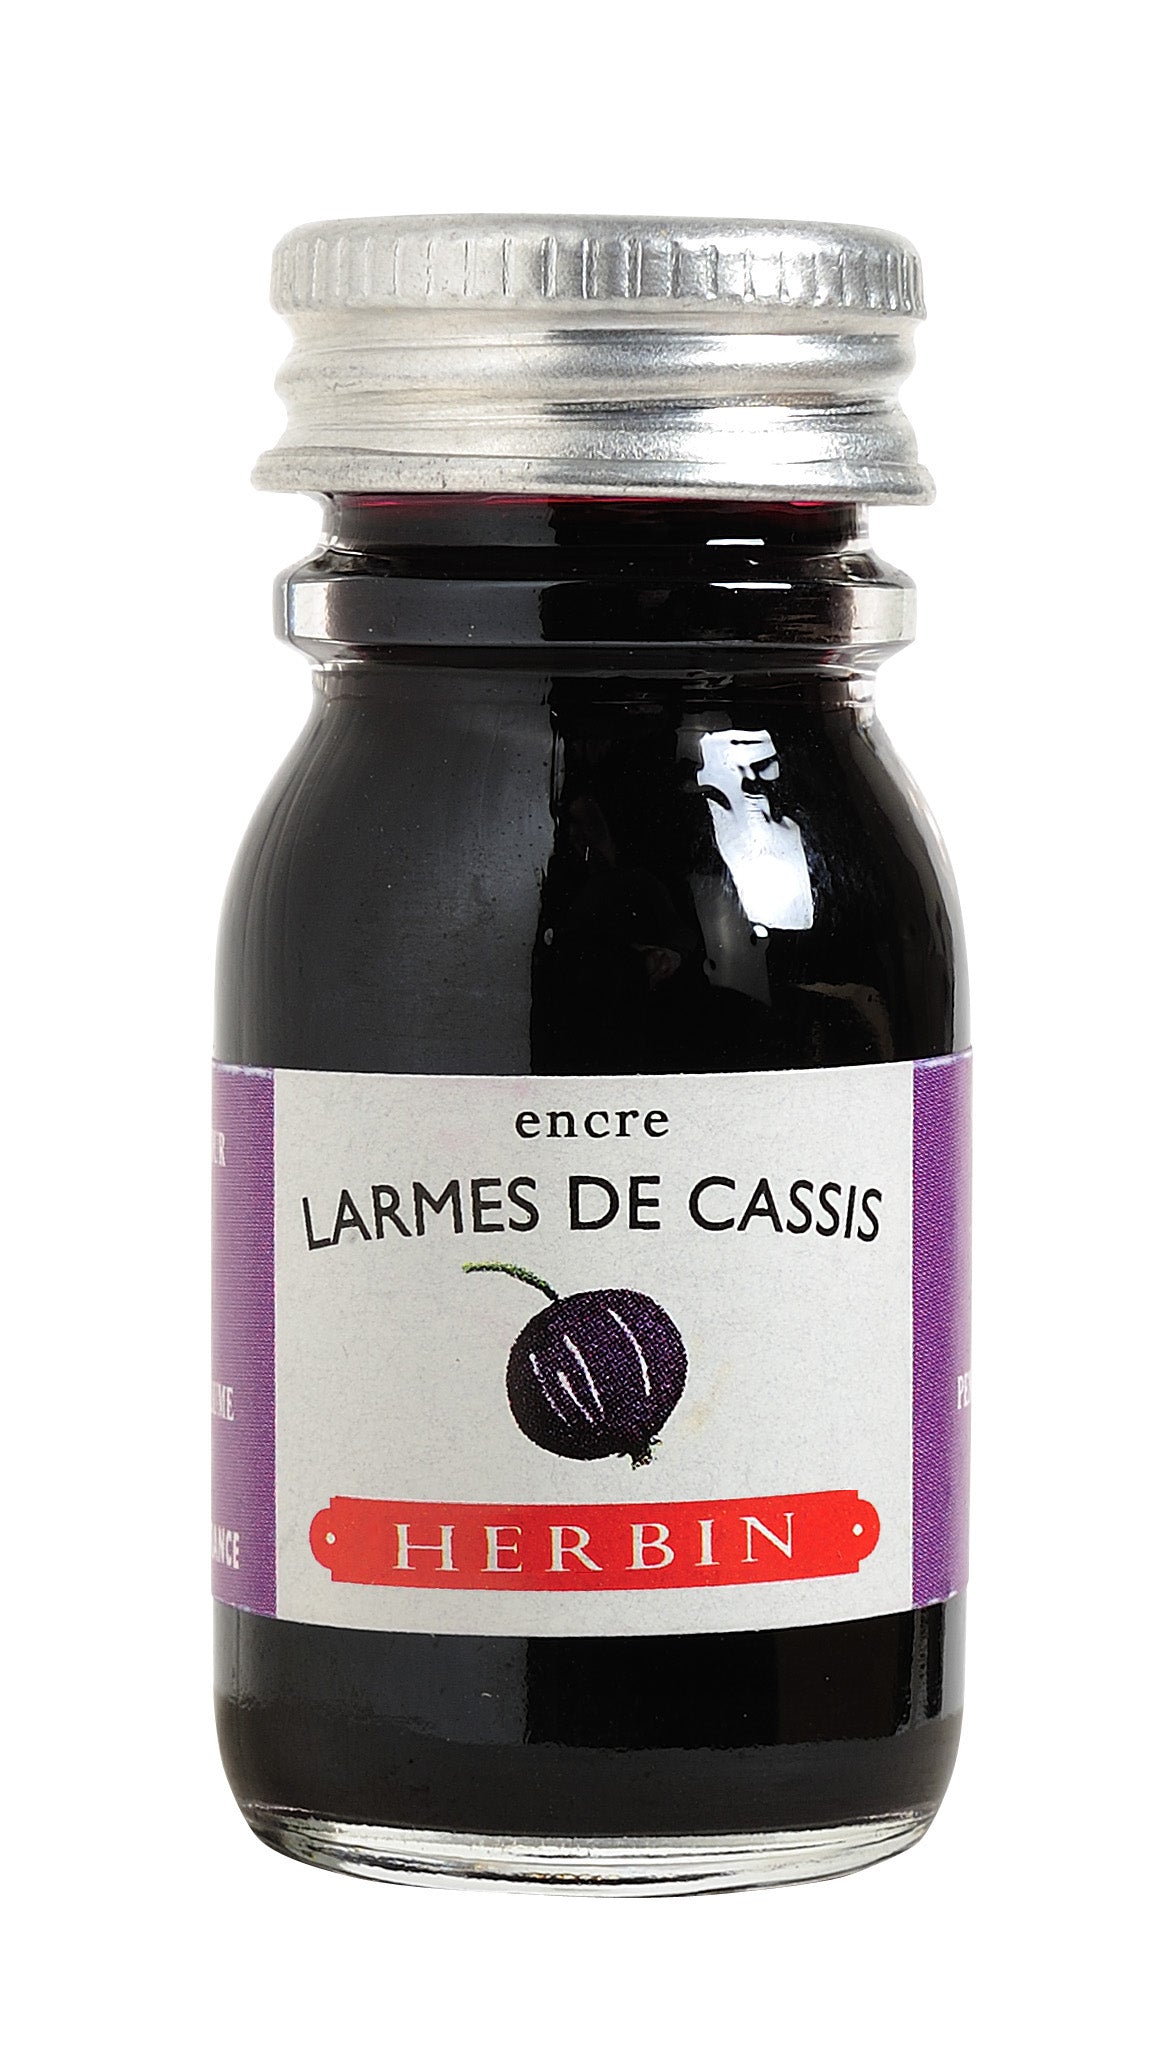 Herbin ink bottle Cassis 10 ml / larmes de cassis